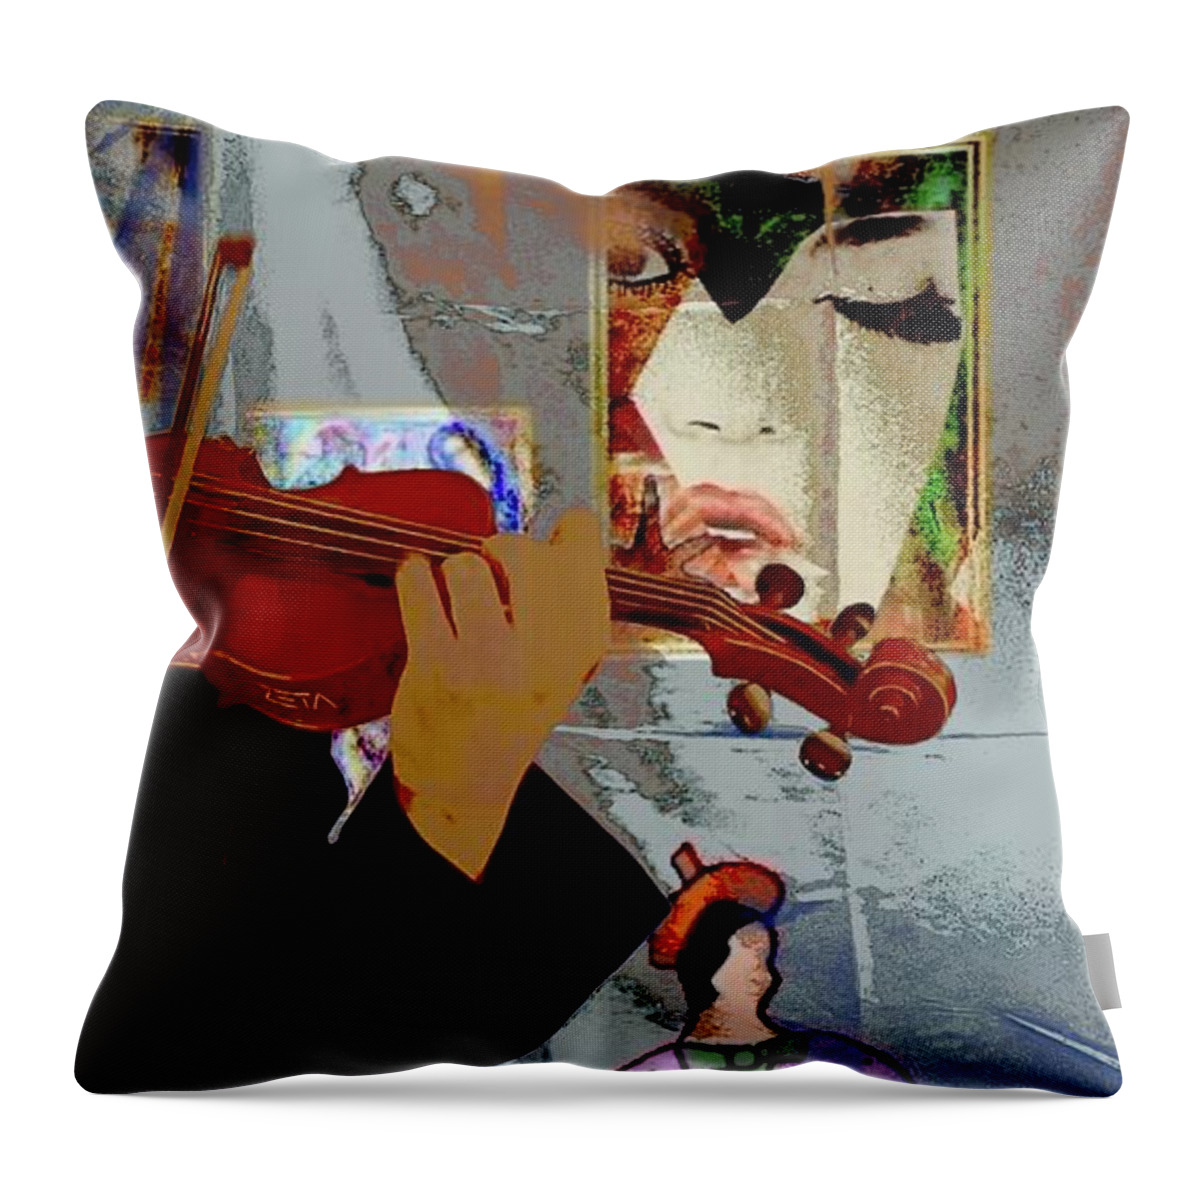 Skeletonichi Artist Throw Pillow featuring the mixed media Skeletonichi Artist by Bencasso Barnesquiat